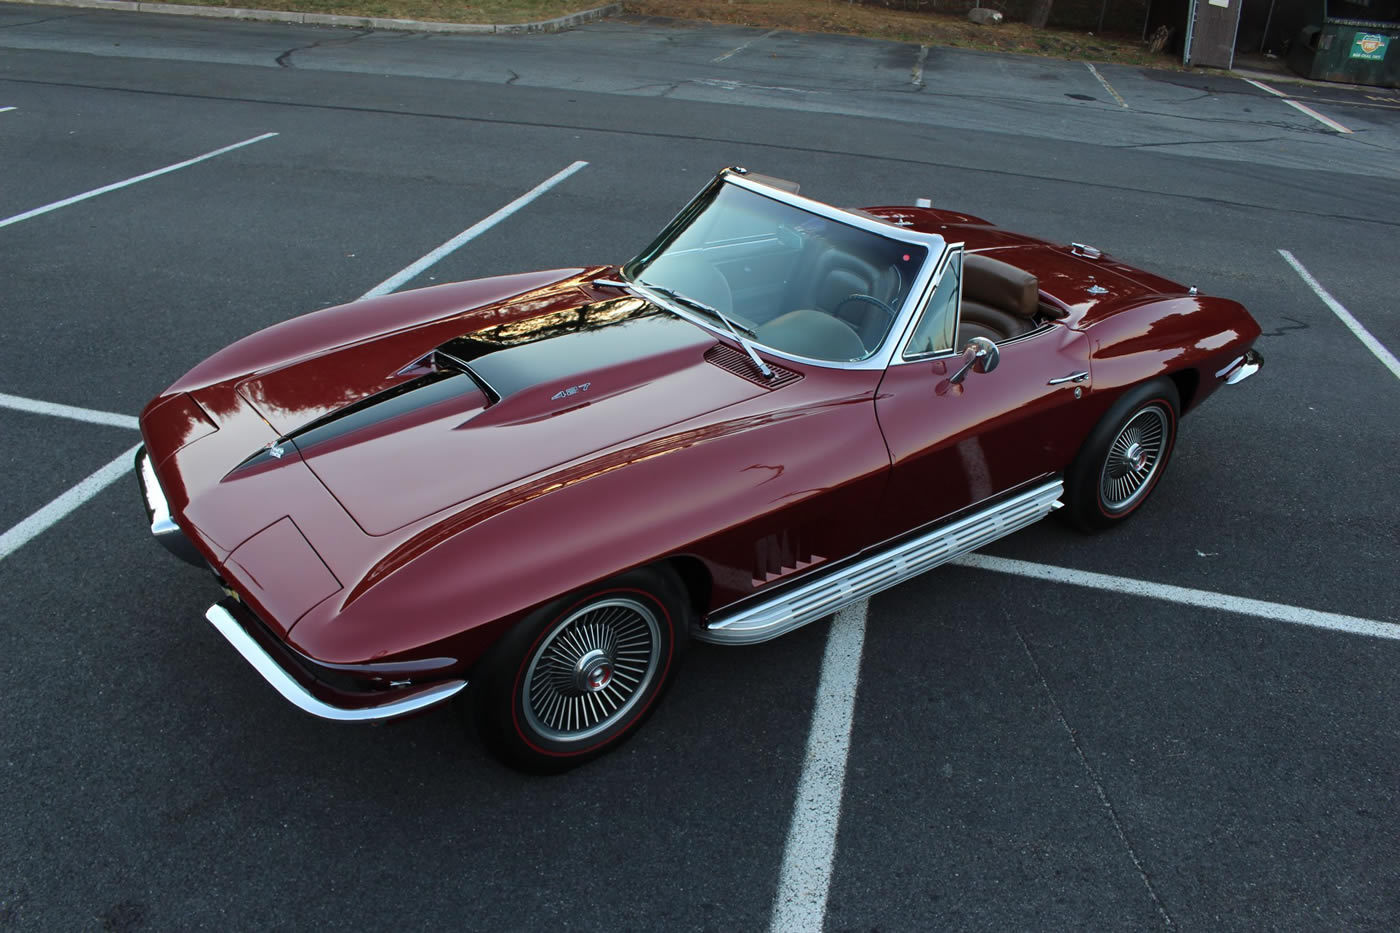 1967 Corvette Convertible L71 427/435 4-Speed in Marlboro Maroon